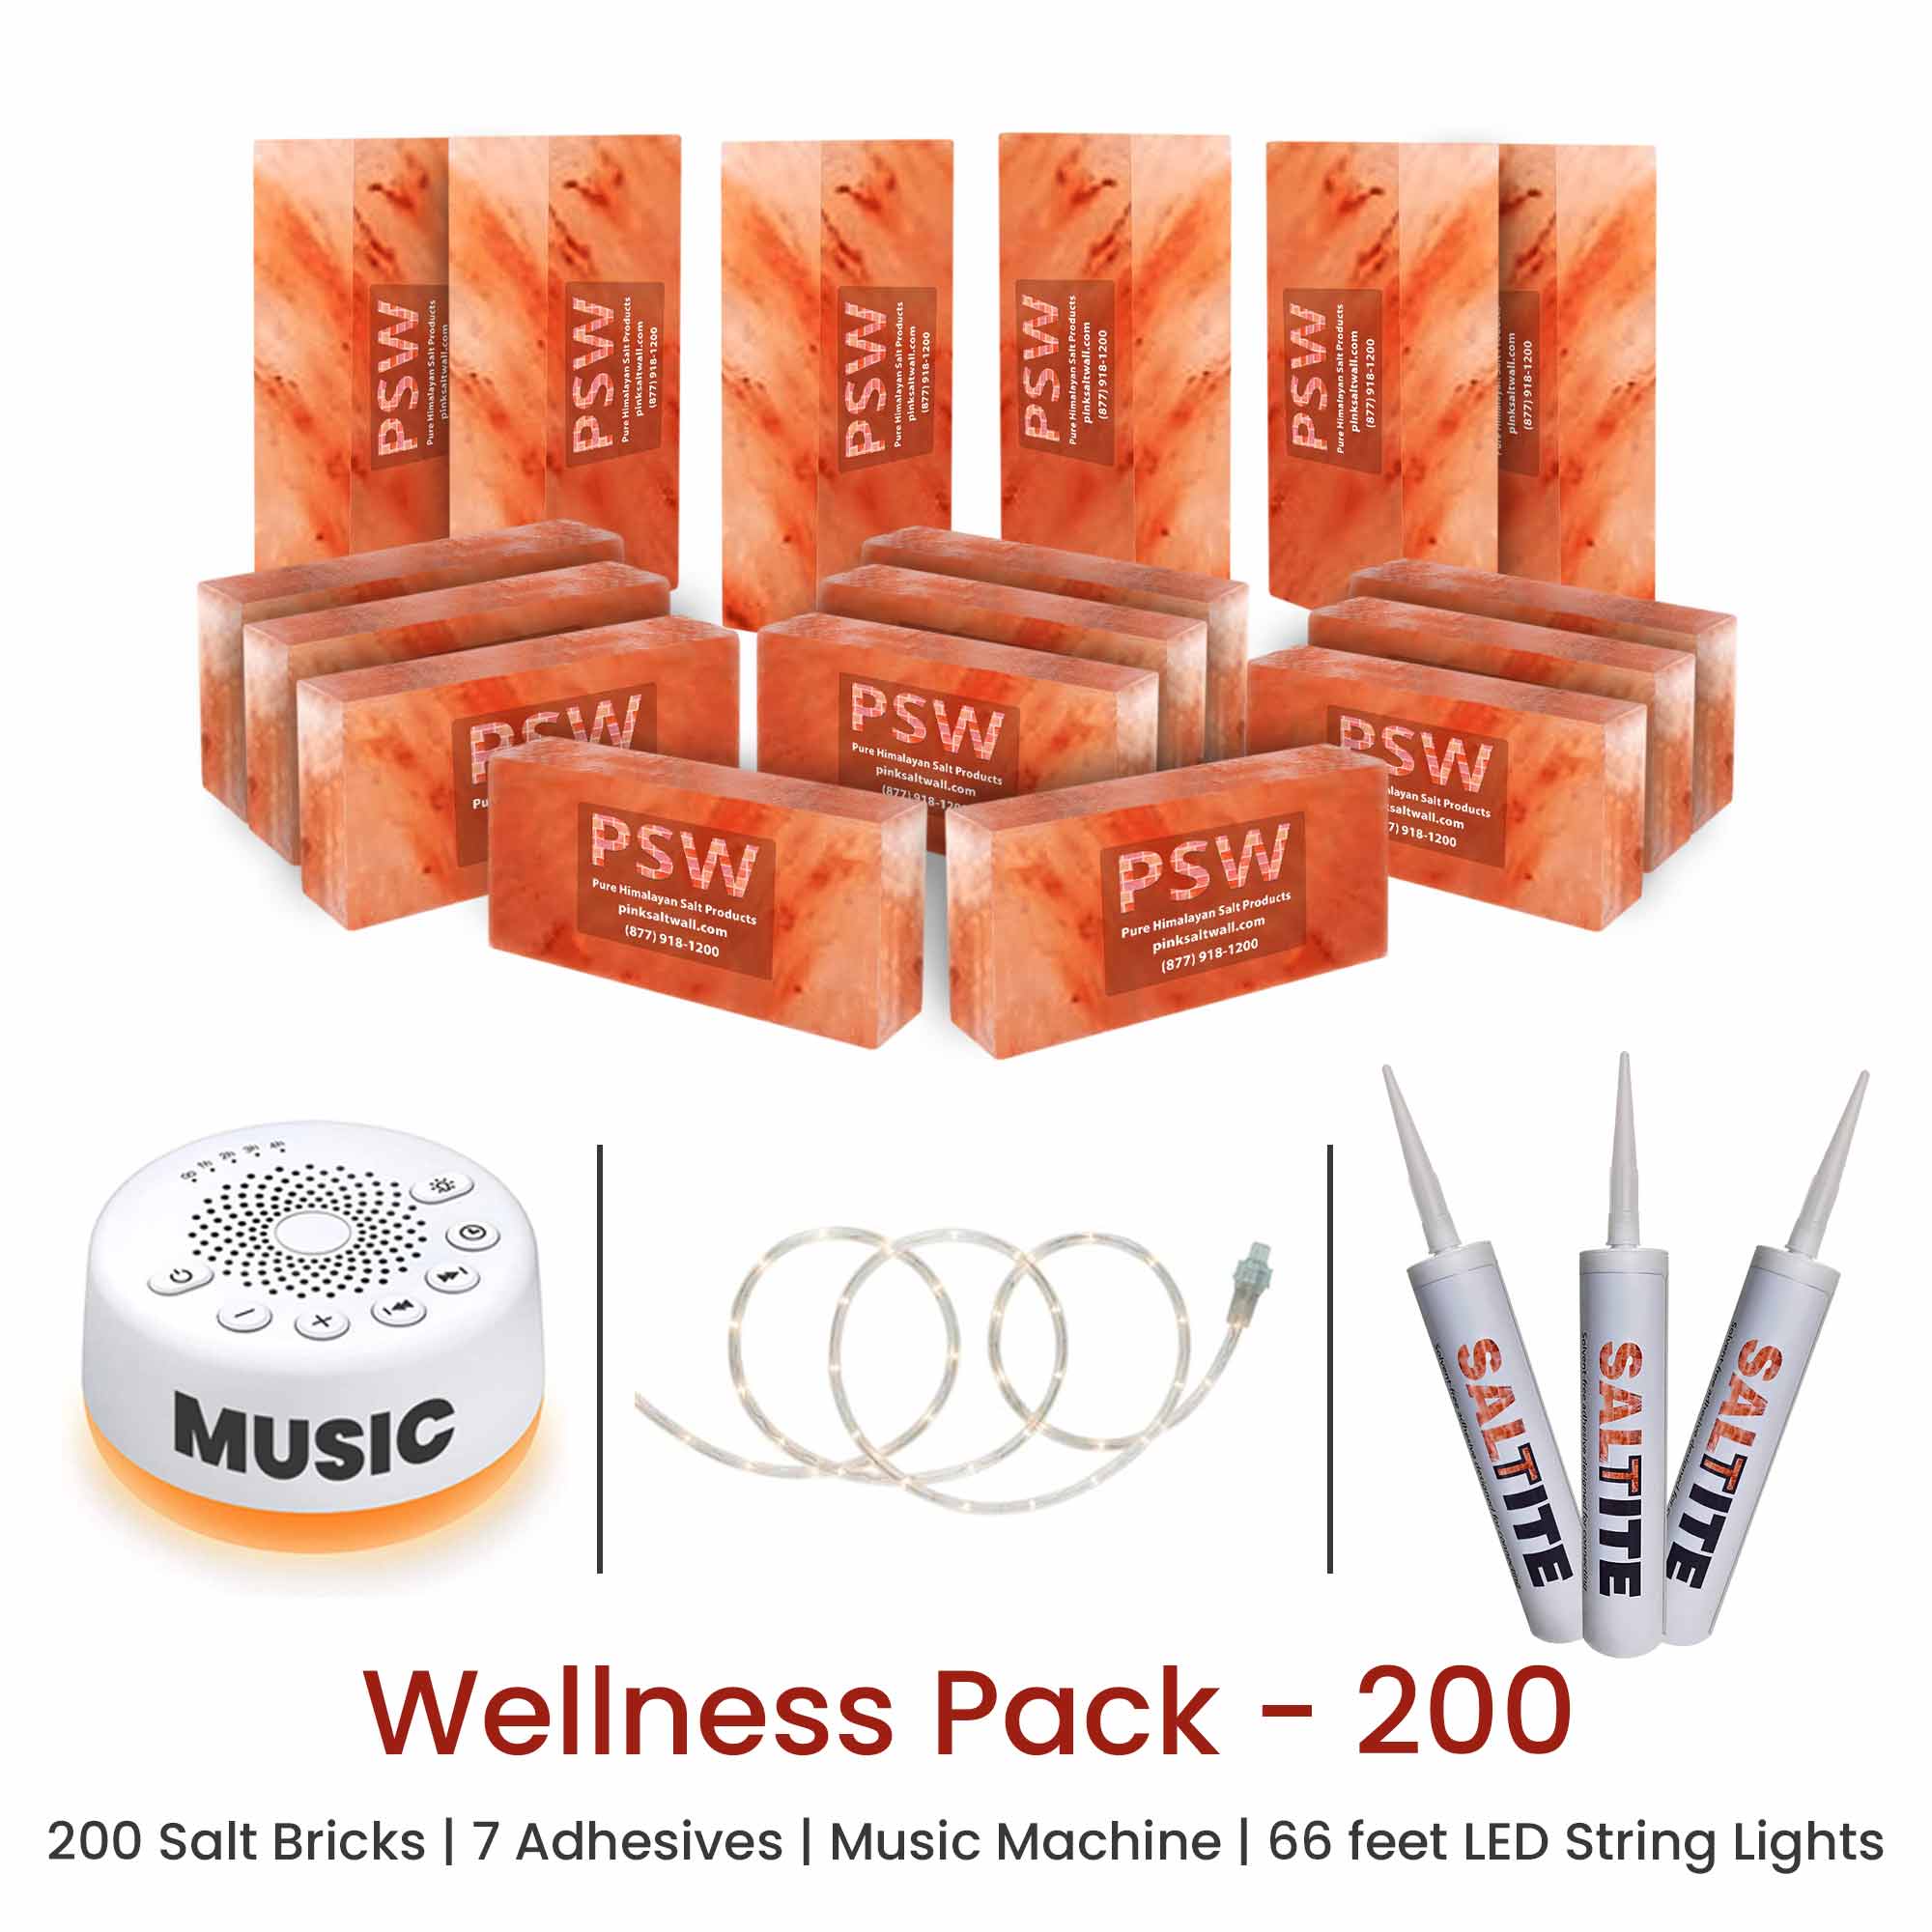 Wellness Pack - 200